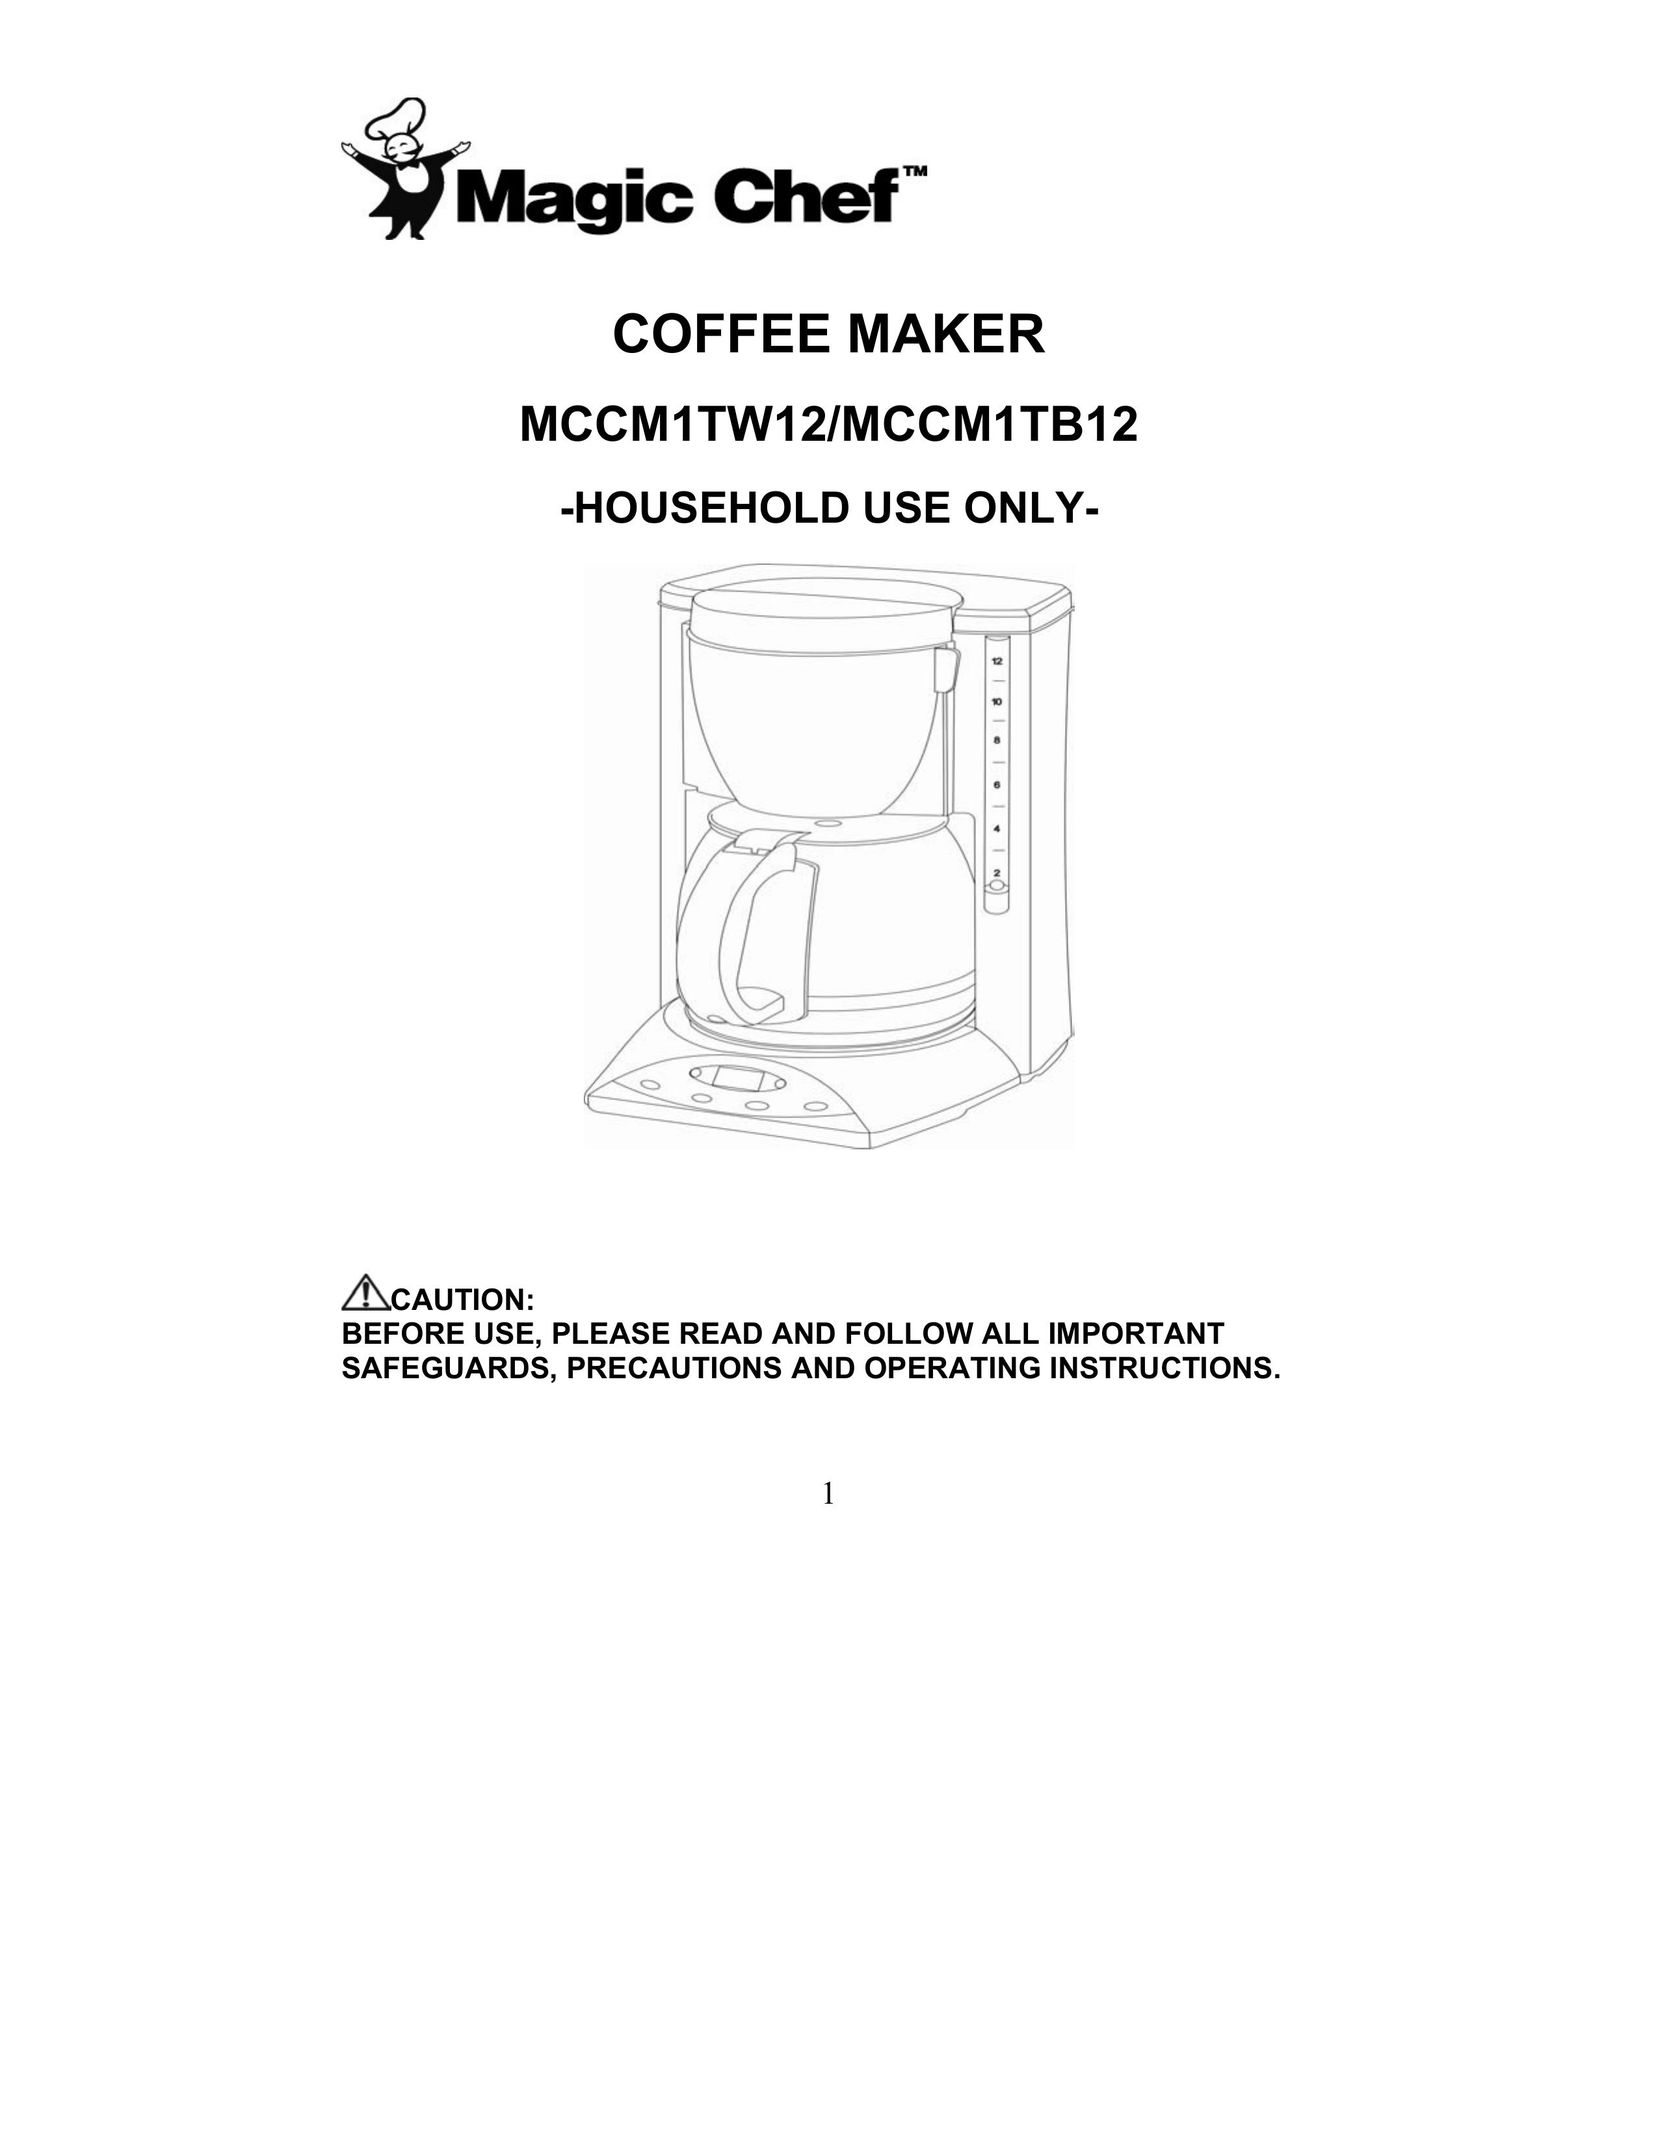 Magic Chef MCCM1TB12 Coffeemaker User Manual